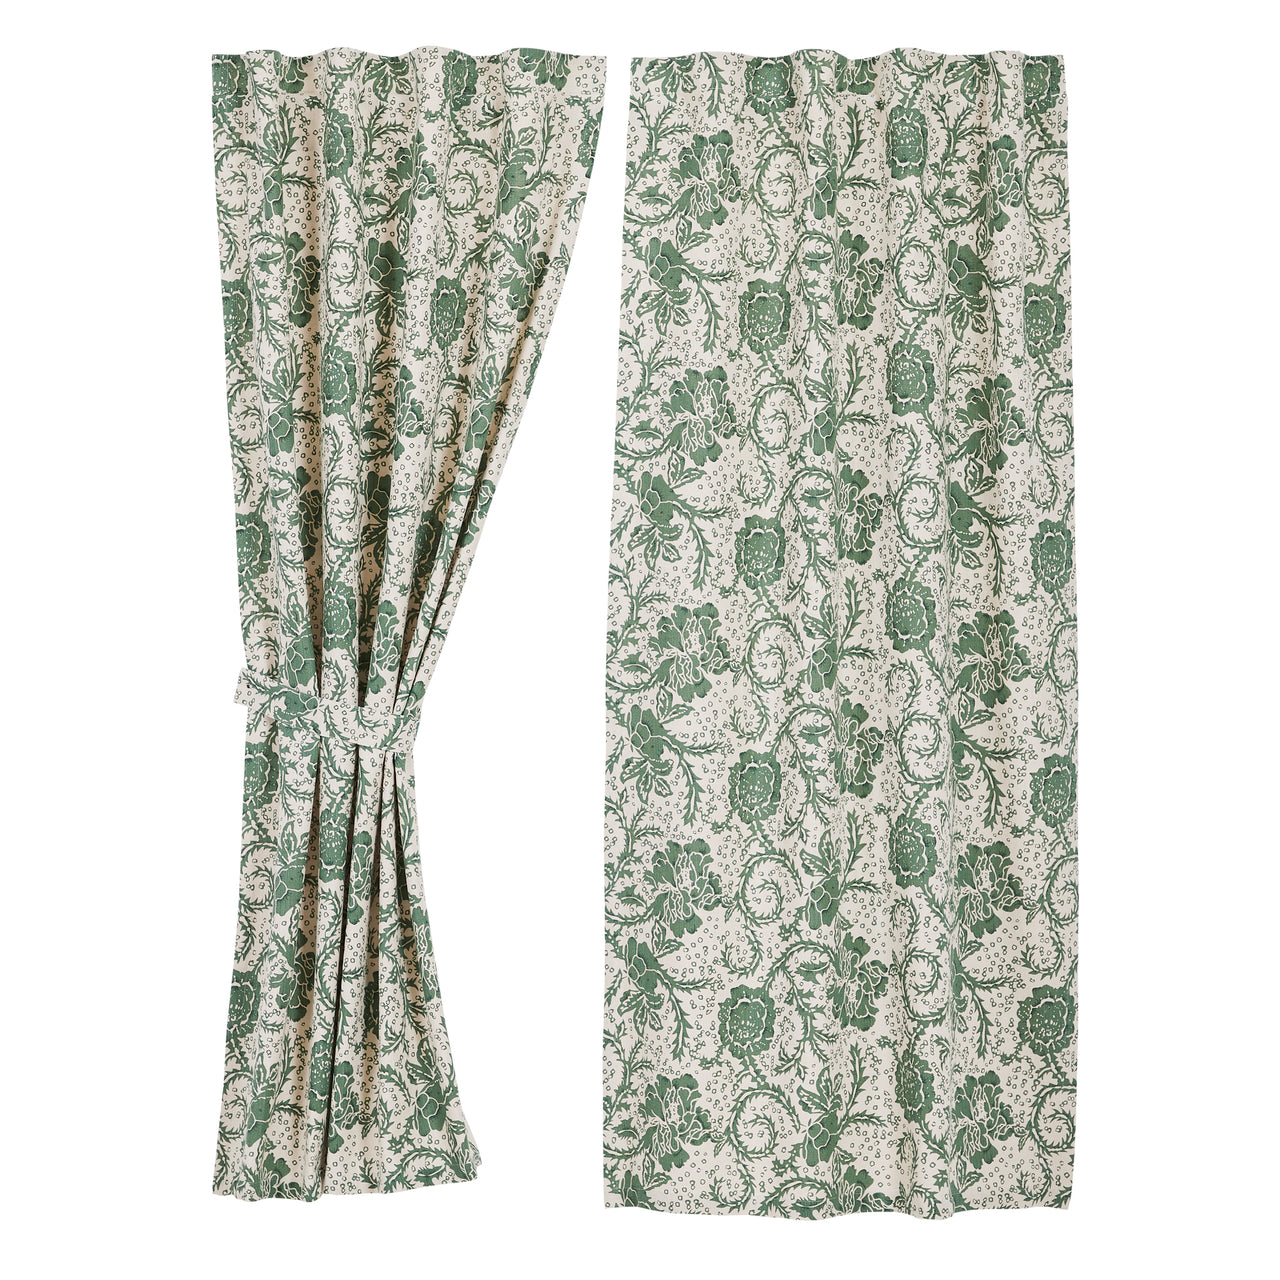 Dorset Green Floral Short Panel Curtain Set of 2 63x36 VHC Brands